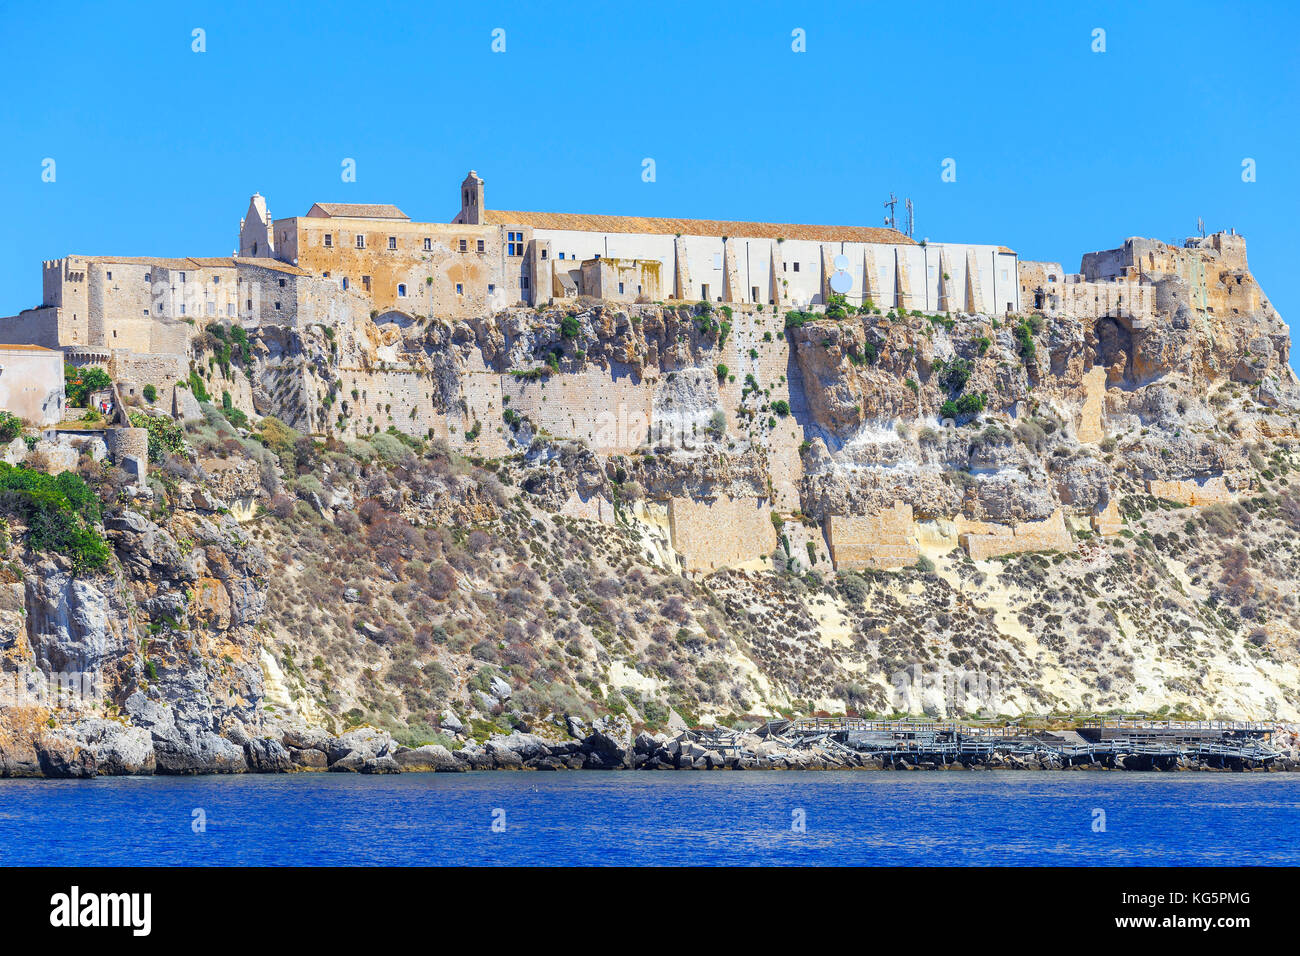 Italy, Puglia/Apulia, Tremiti Islands, San Nicola Island, Abbey of Santa Maria from the sea. Stock Photo